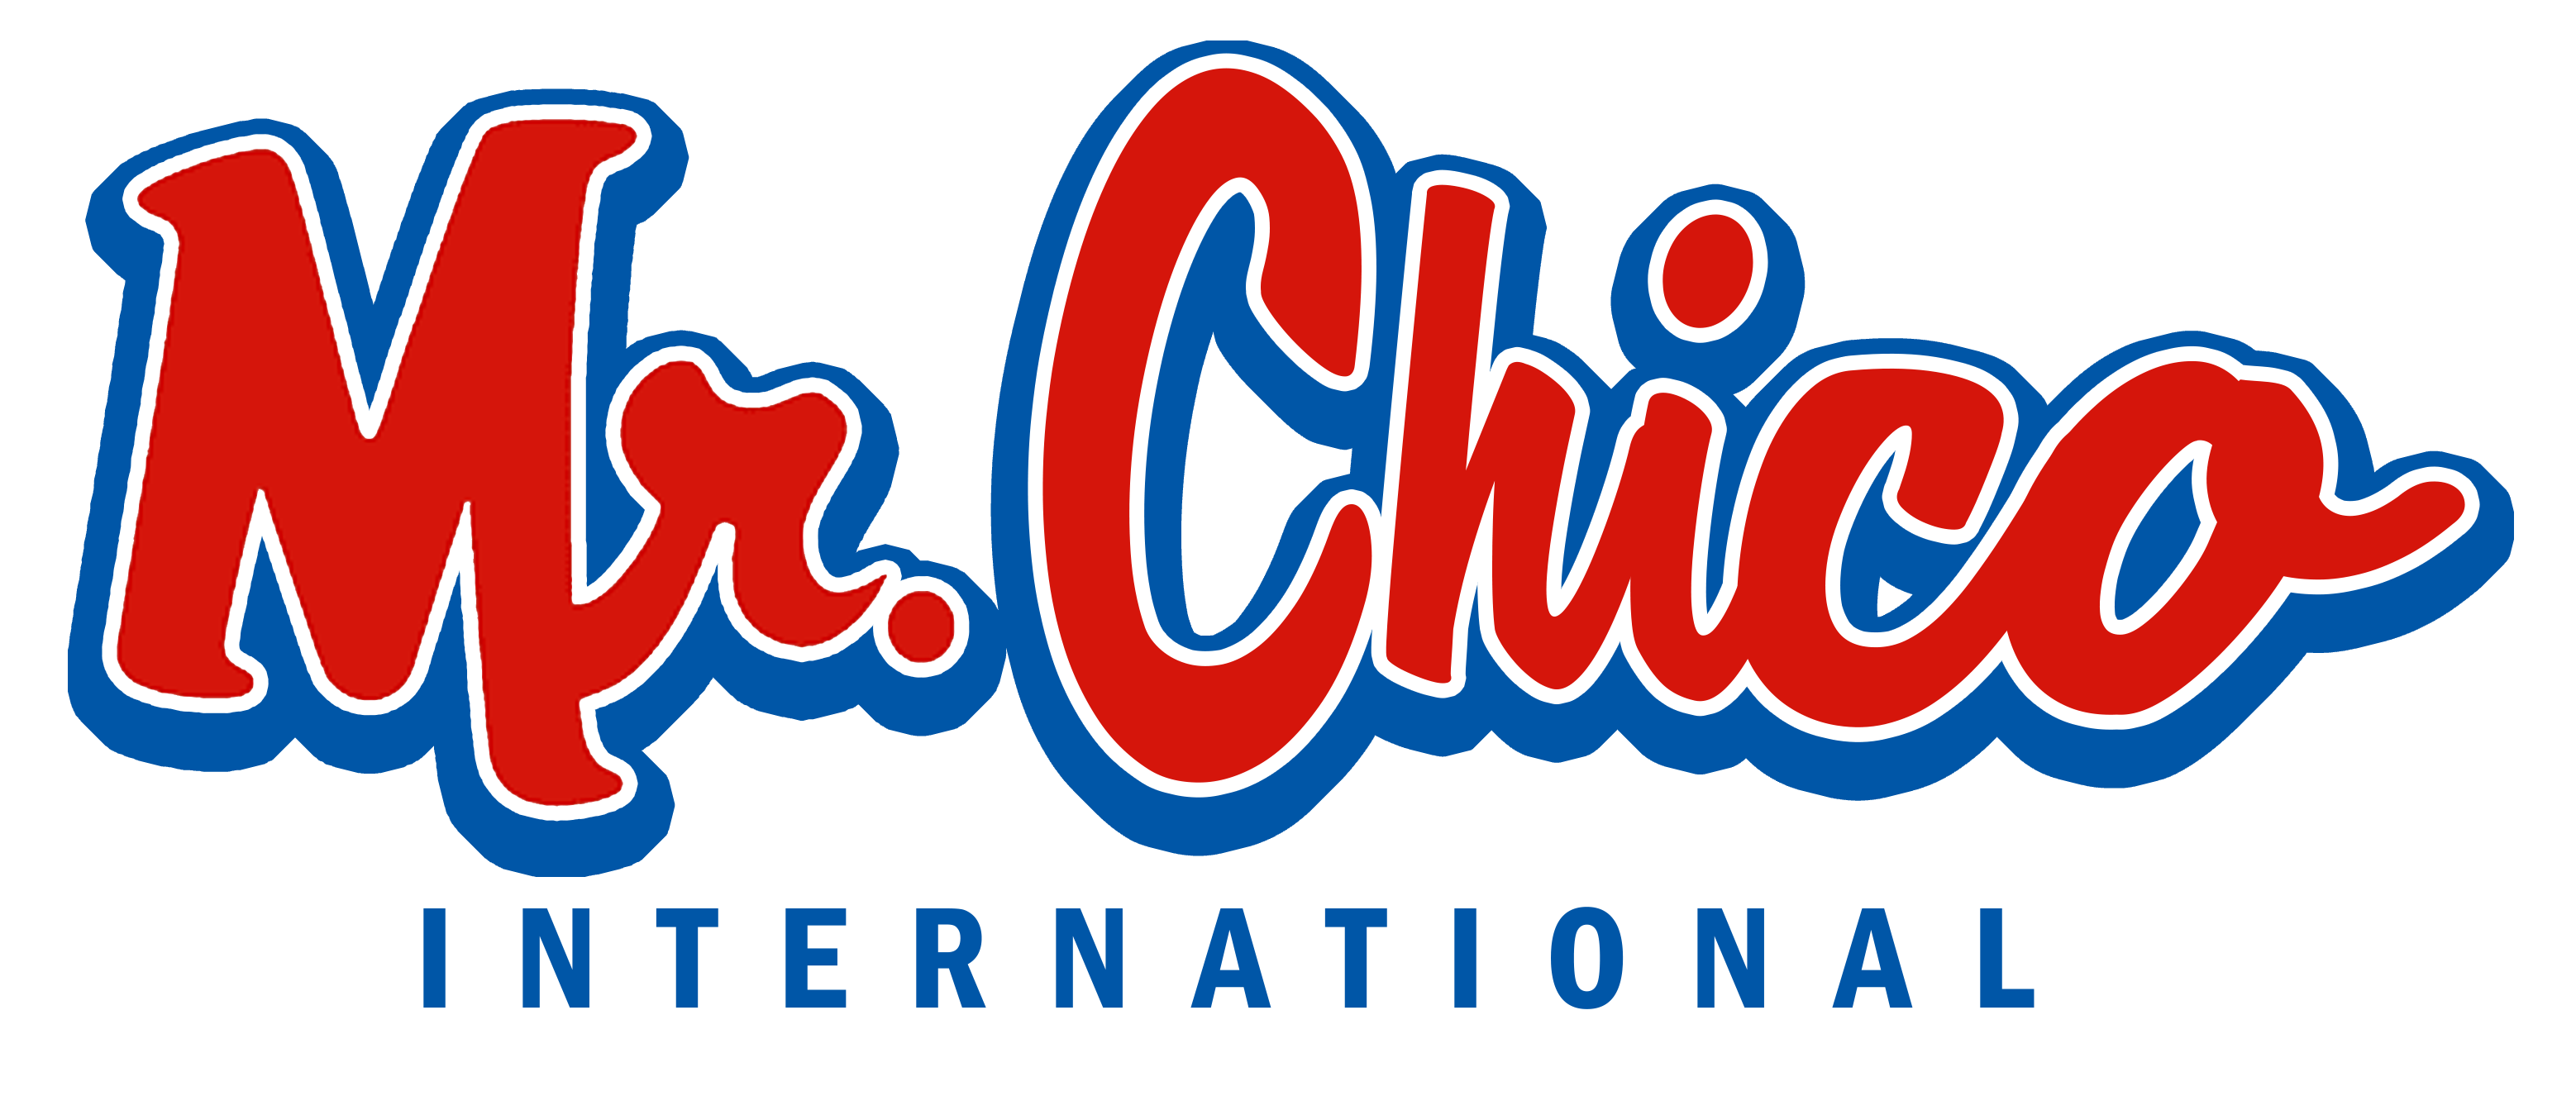 Chico International